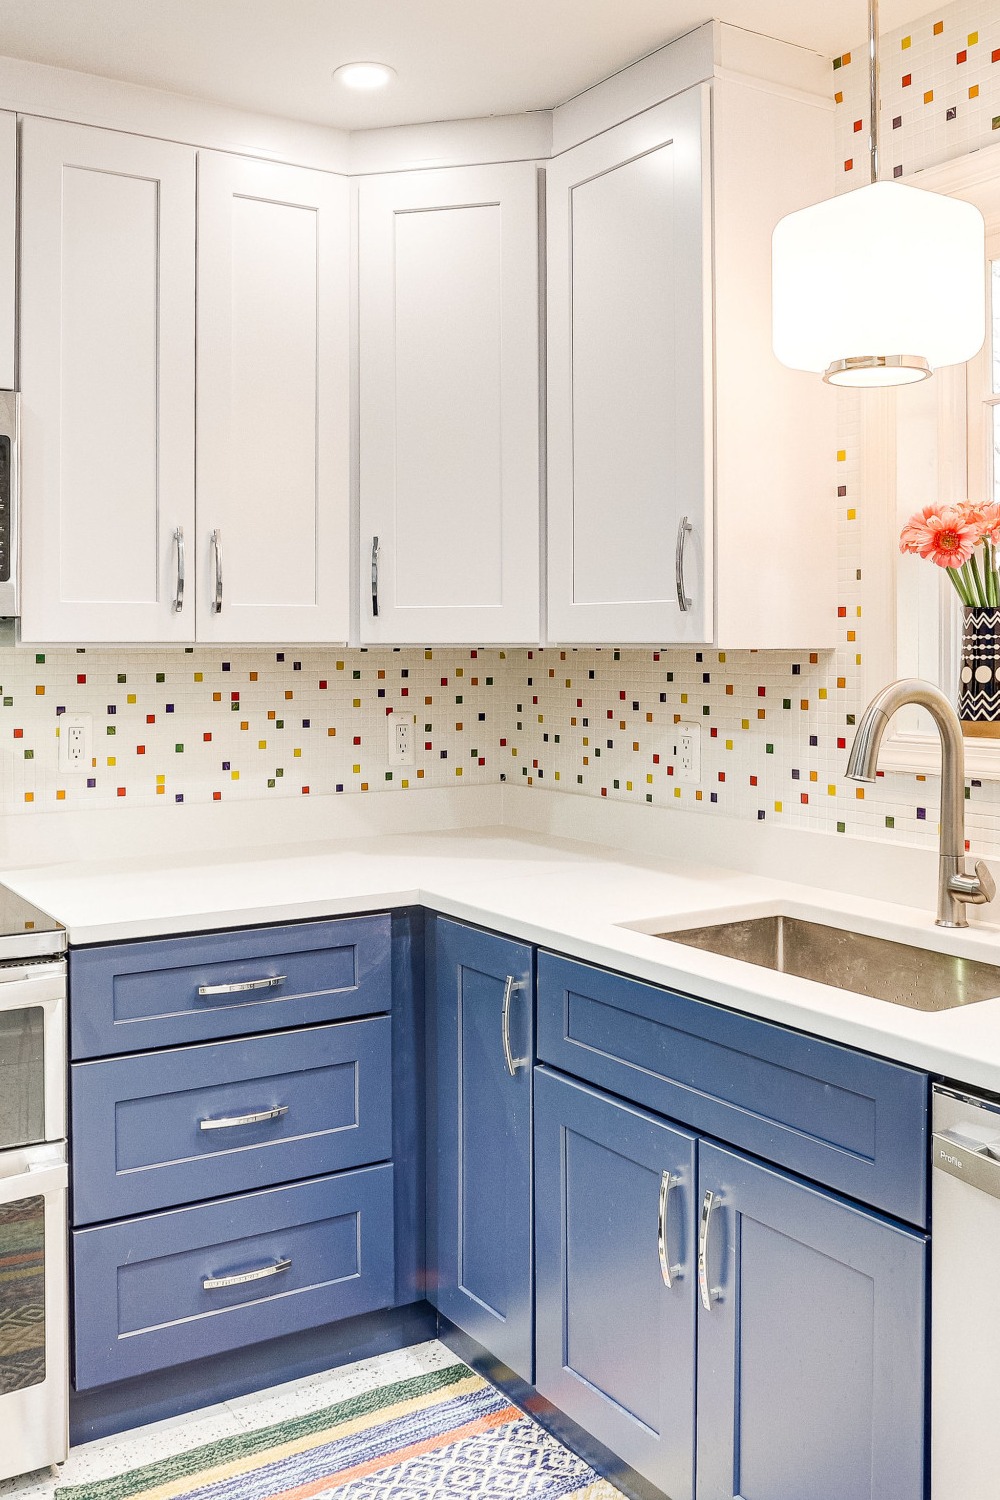 Two Toned Kitchen Cabinets Recessed Panel Cabinets Mosaic Tile Backsplash